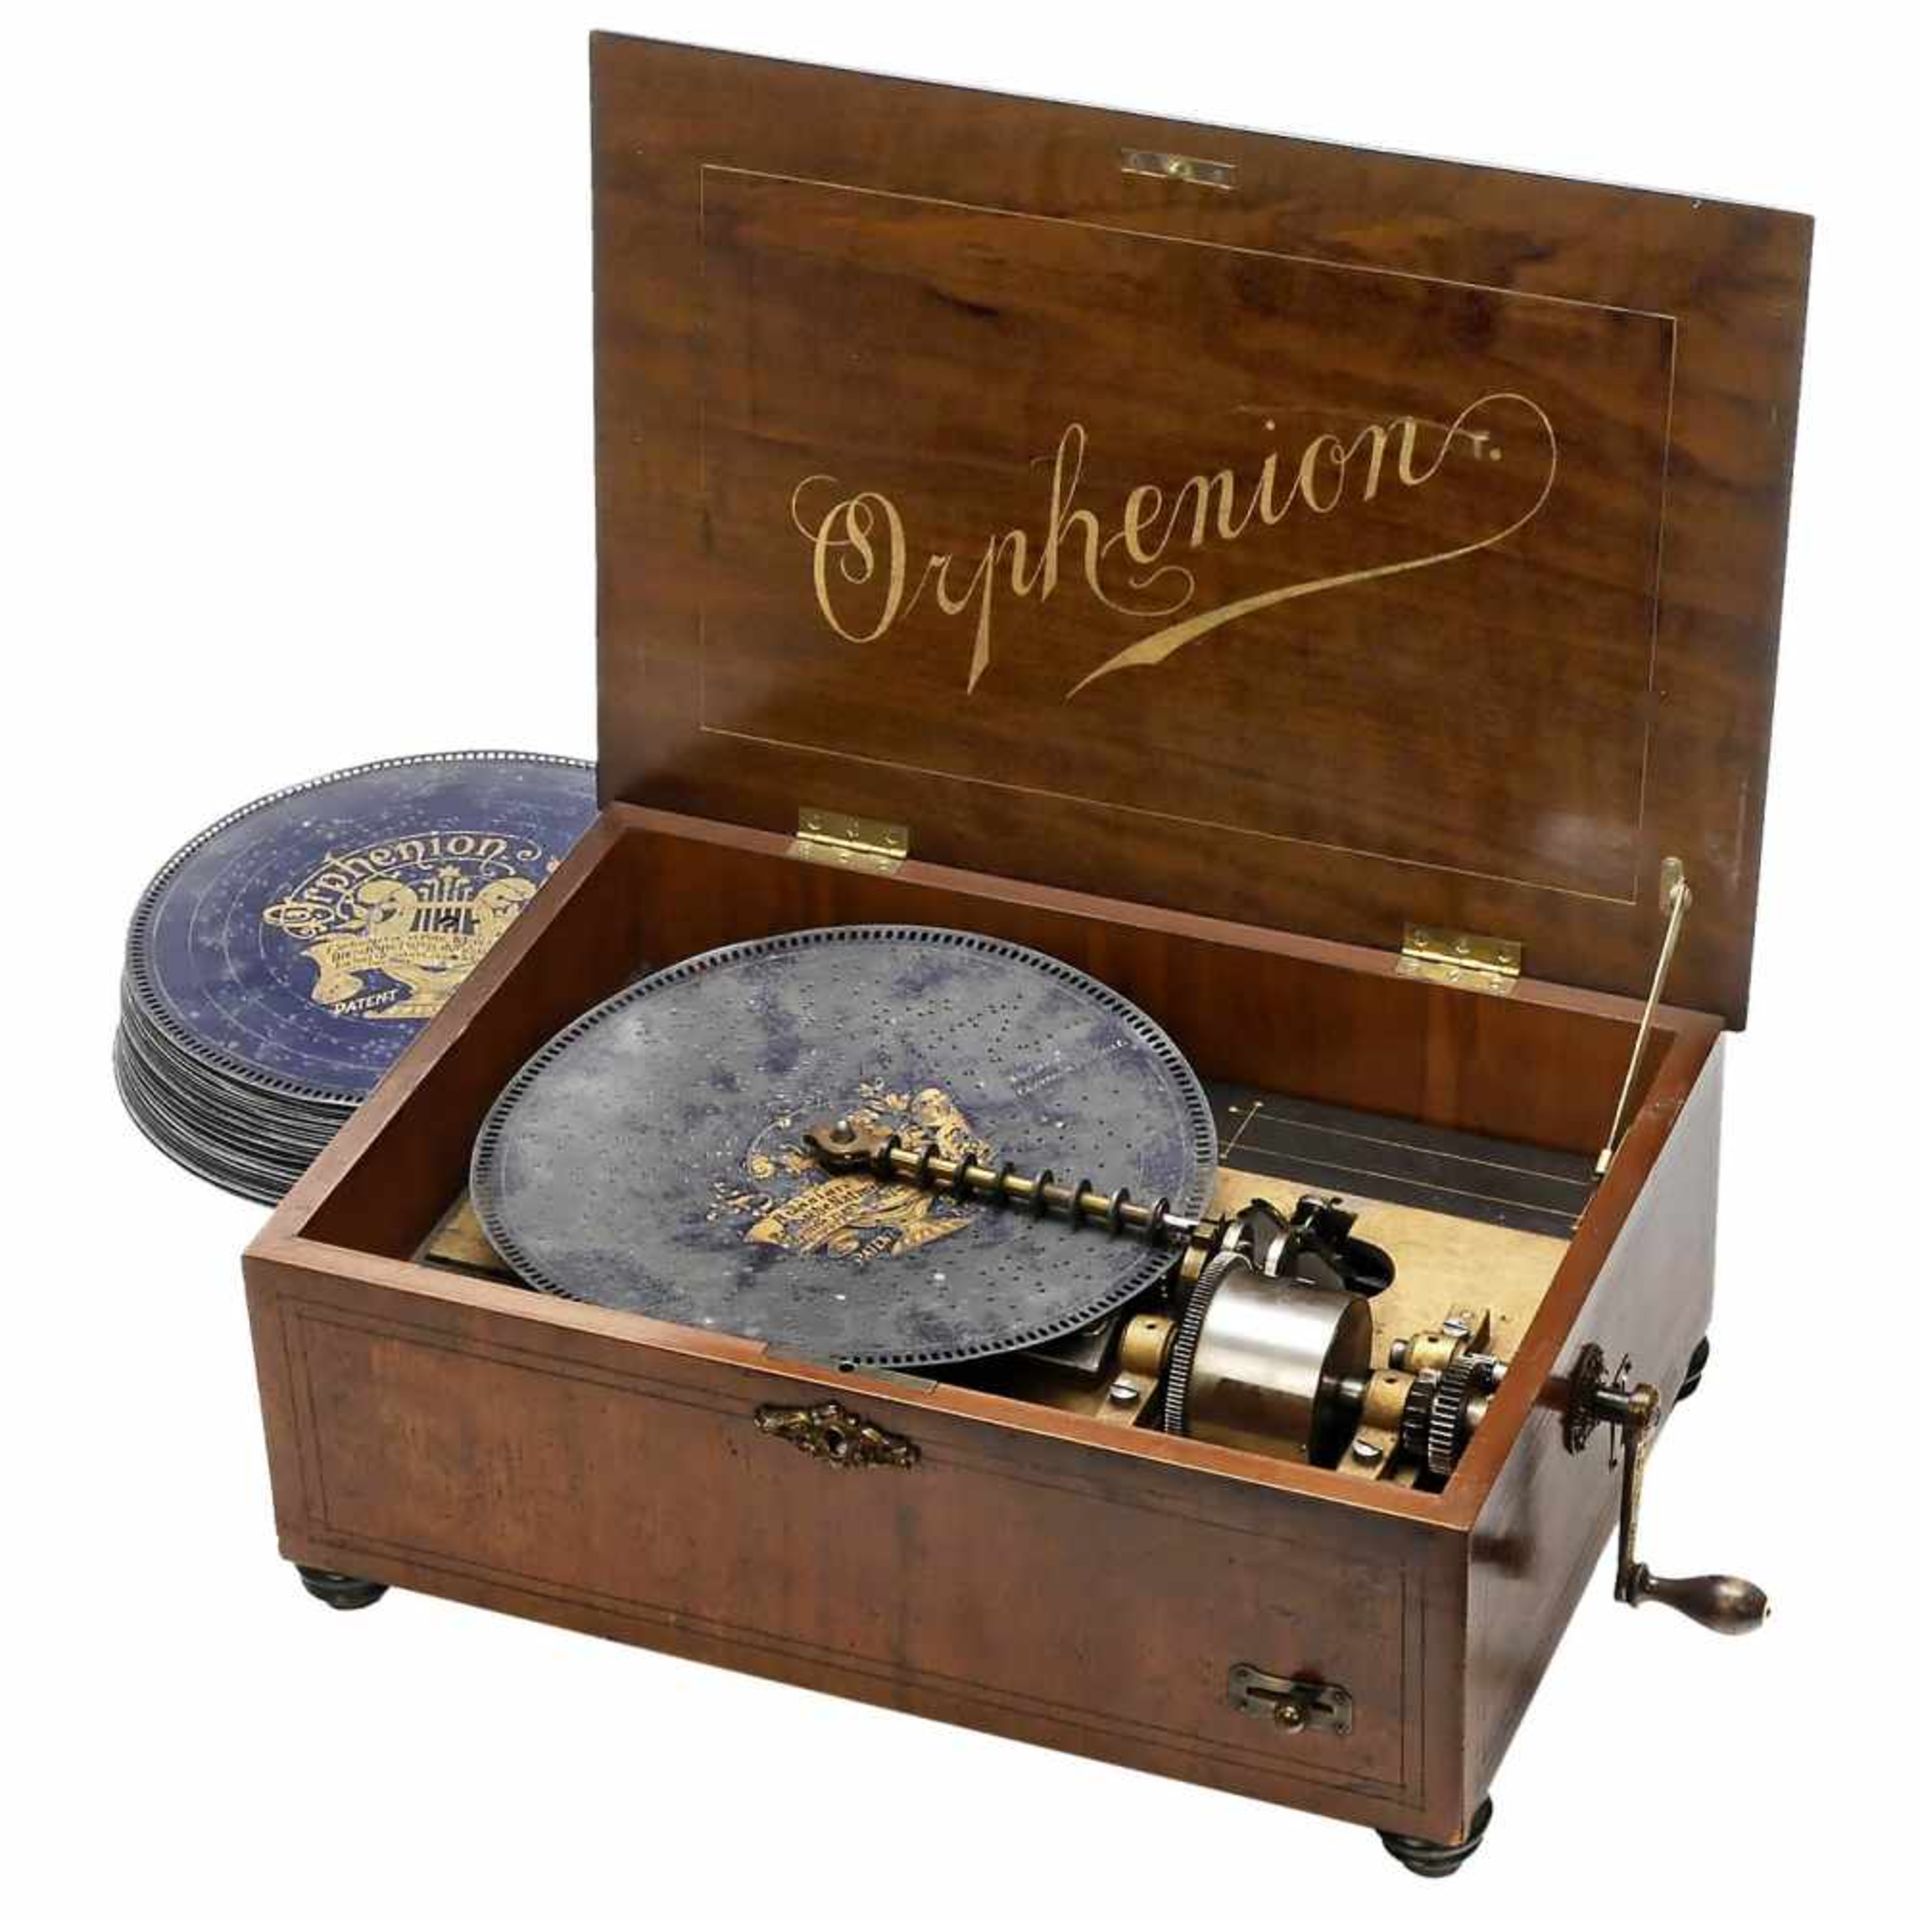 Orphenion Model 51 Table Disc Musical Box, c. 1895Manufacturer: Bruno Rückert, Leipzig. For discs of